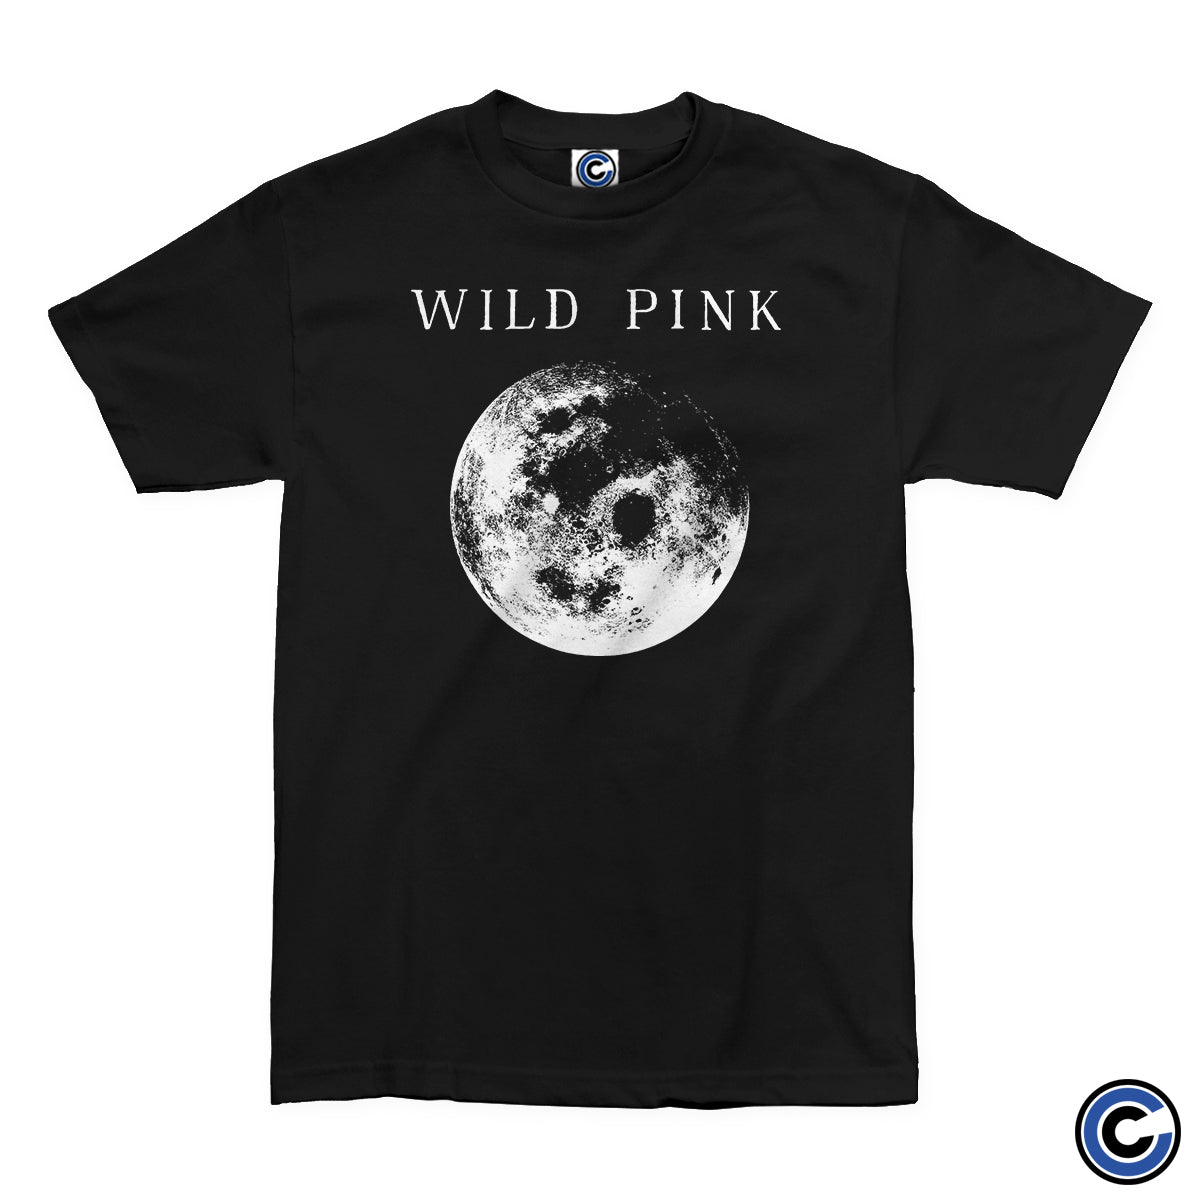 Wild Pink "Full Moon" Shirt